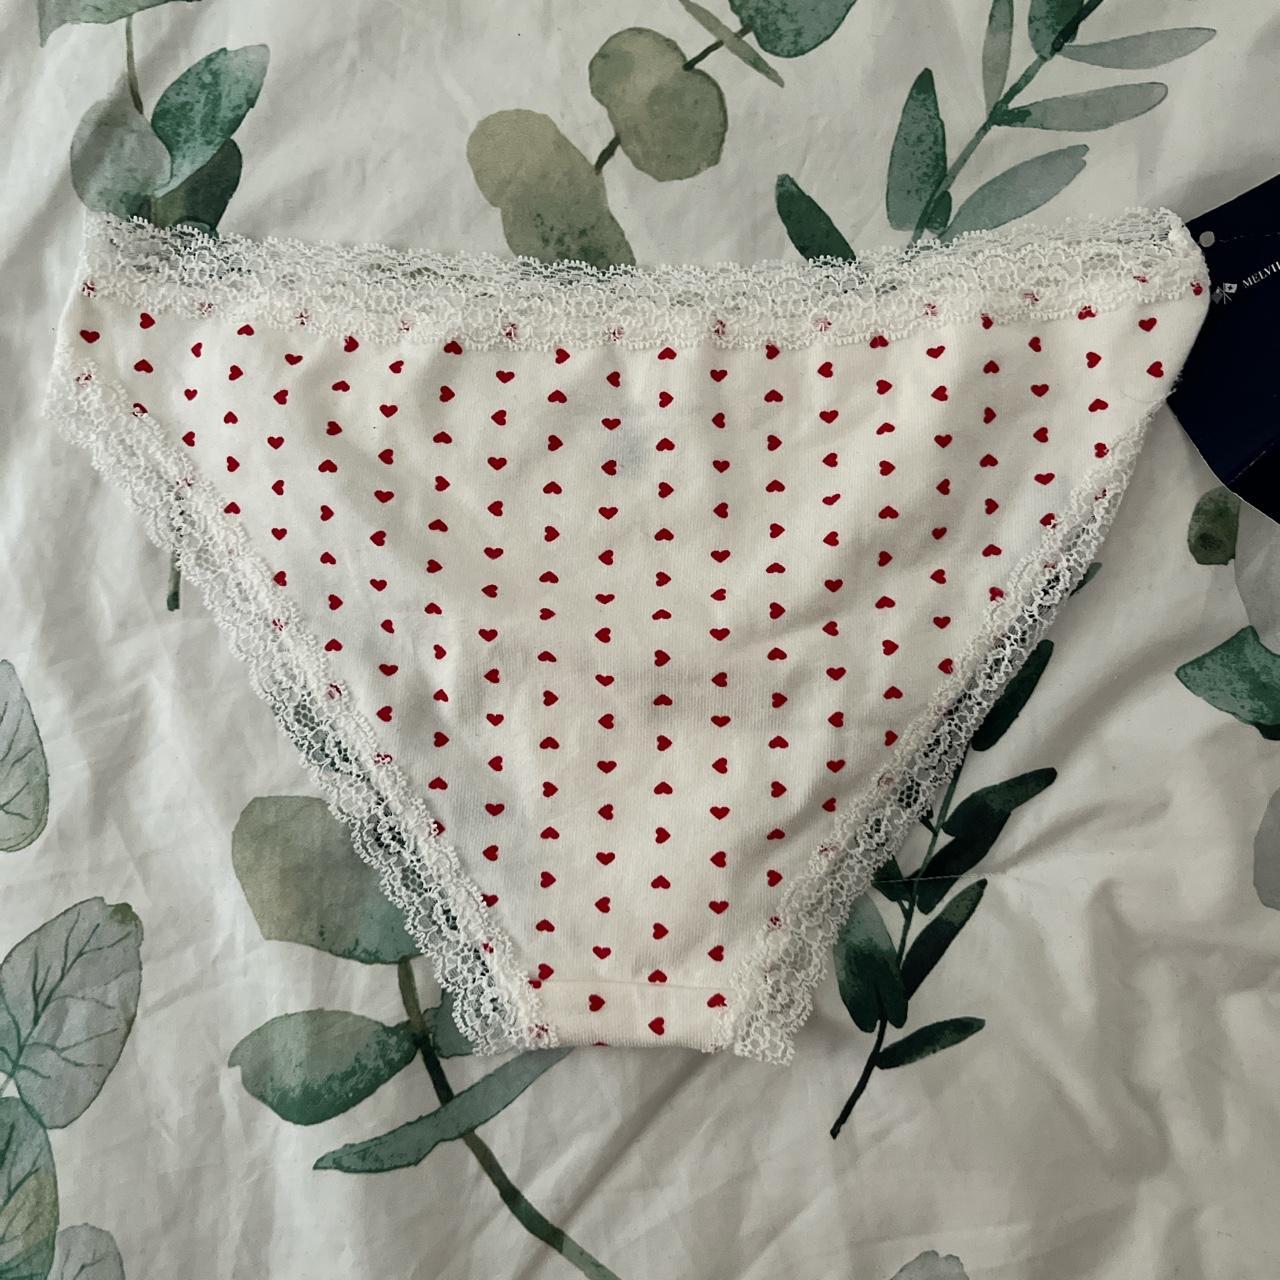 Brandy melville heart underwear - Depop